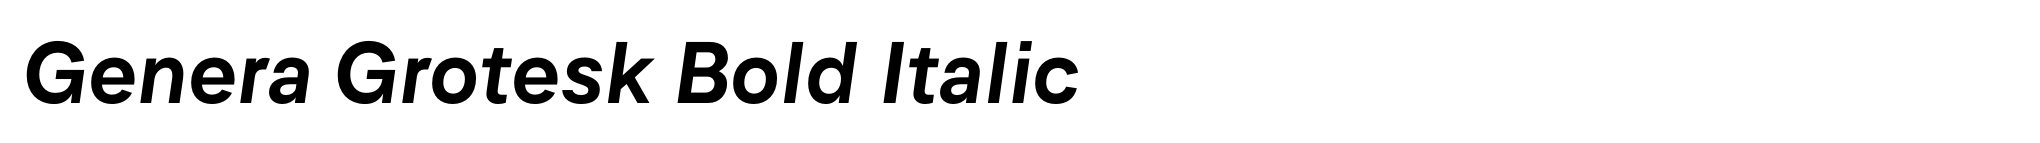 Genera Grotesk Bold Italic image